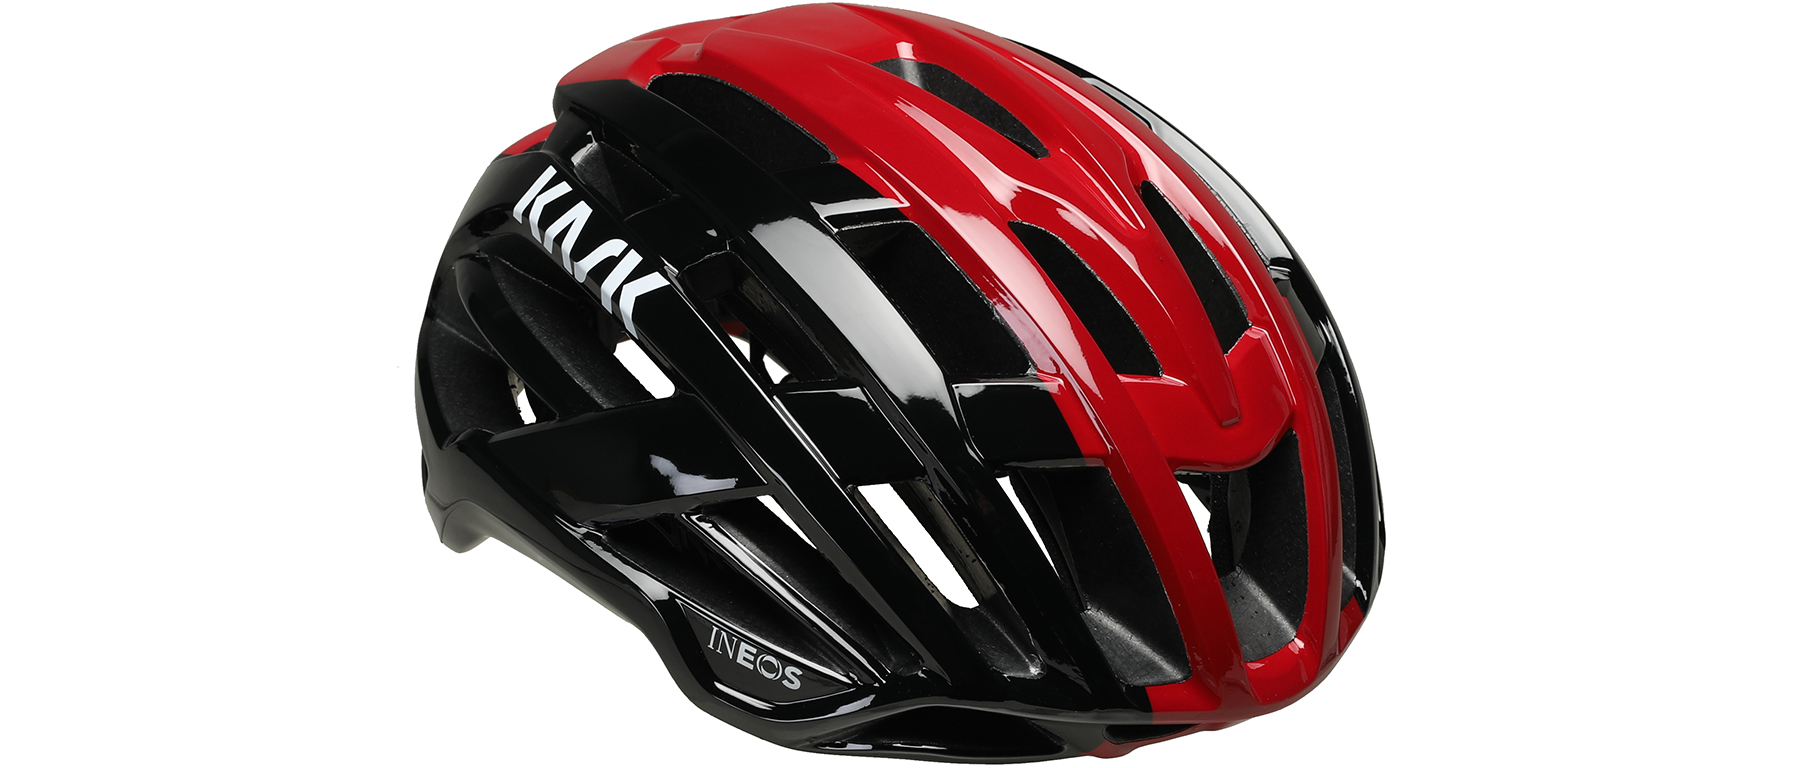 KASK Valegro Ineos Helmet Excel Sports Shop Online From Boulder Colorado